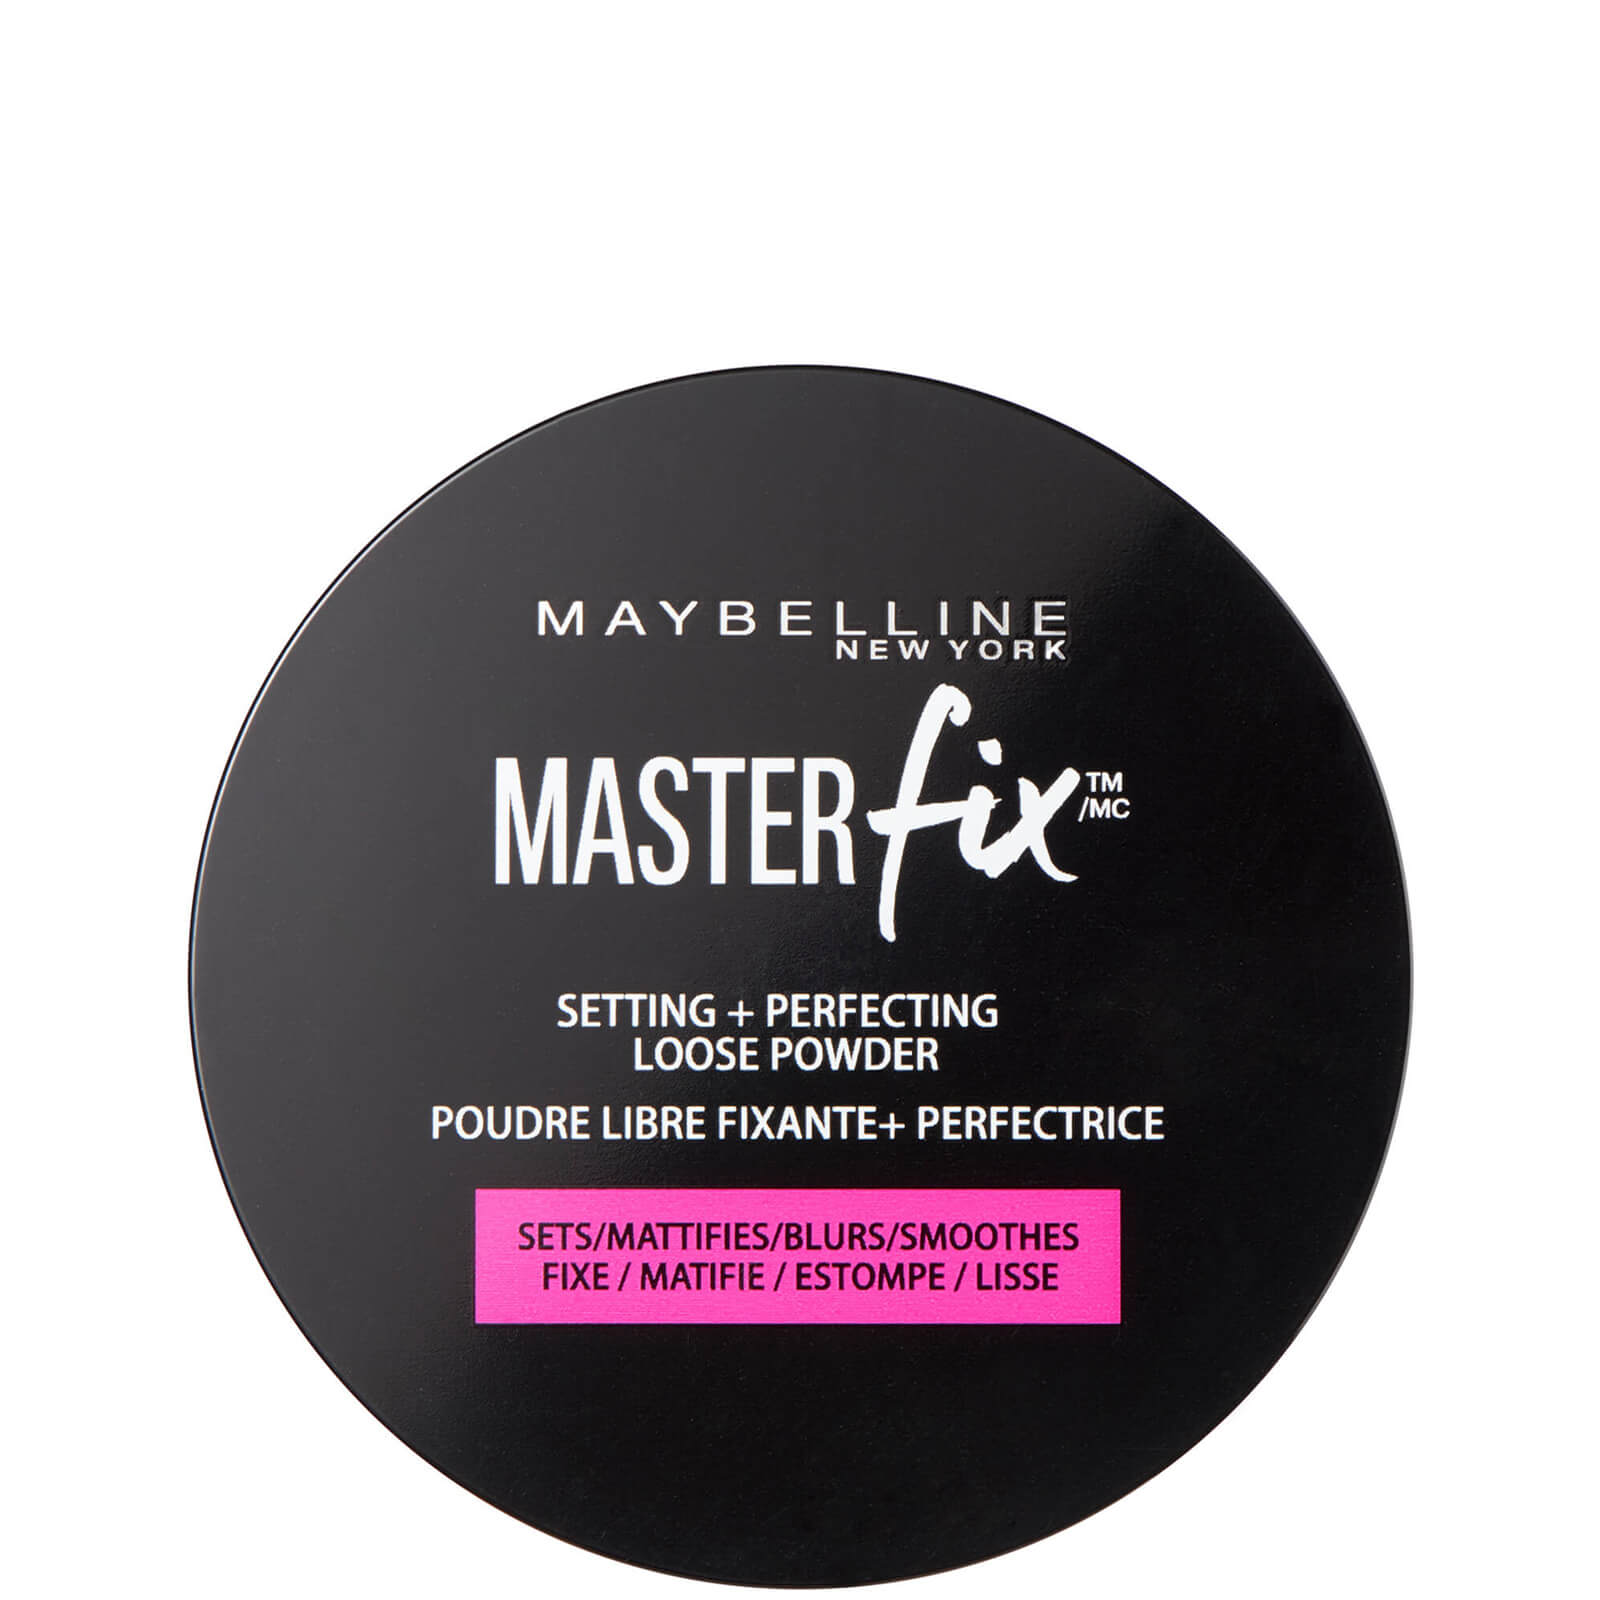 Image of Maybelline Master Fix cipria fissante in polvere traslucida 6 g